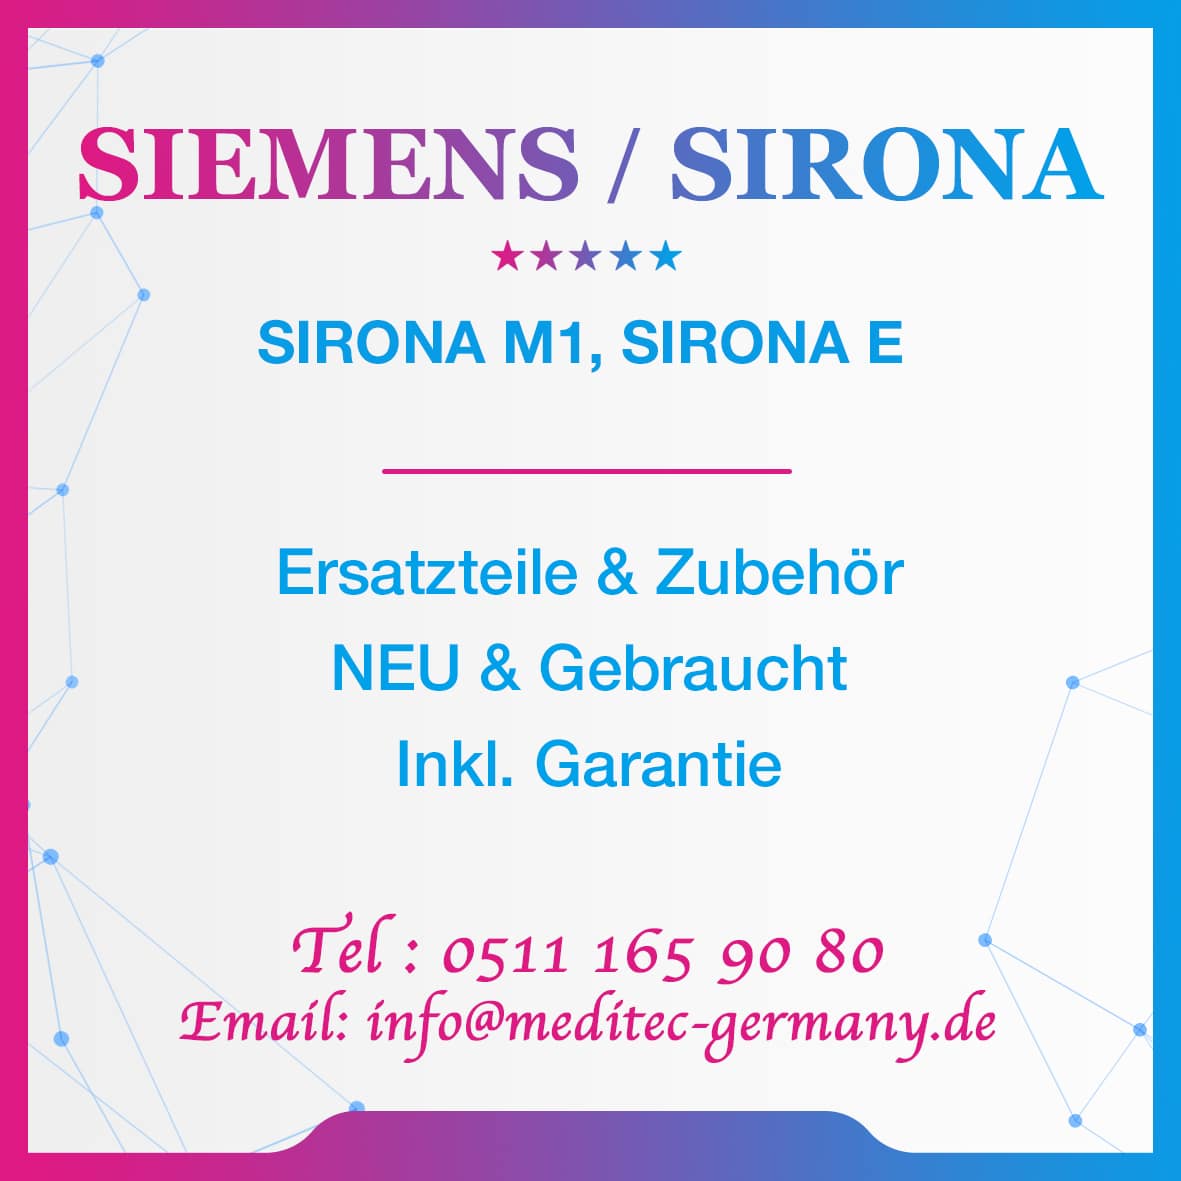 Siemens Sirona M1 / E Behandlungseinheiten